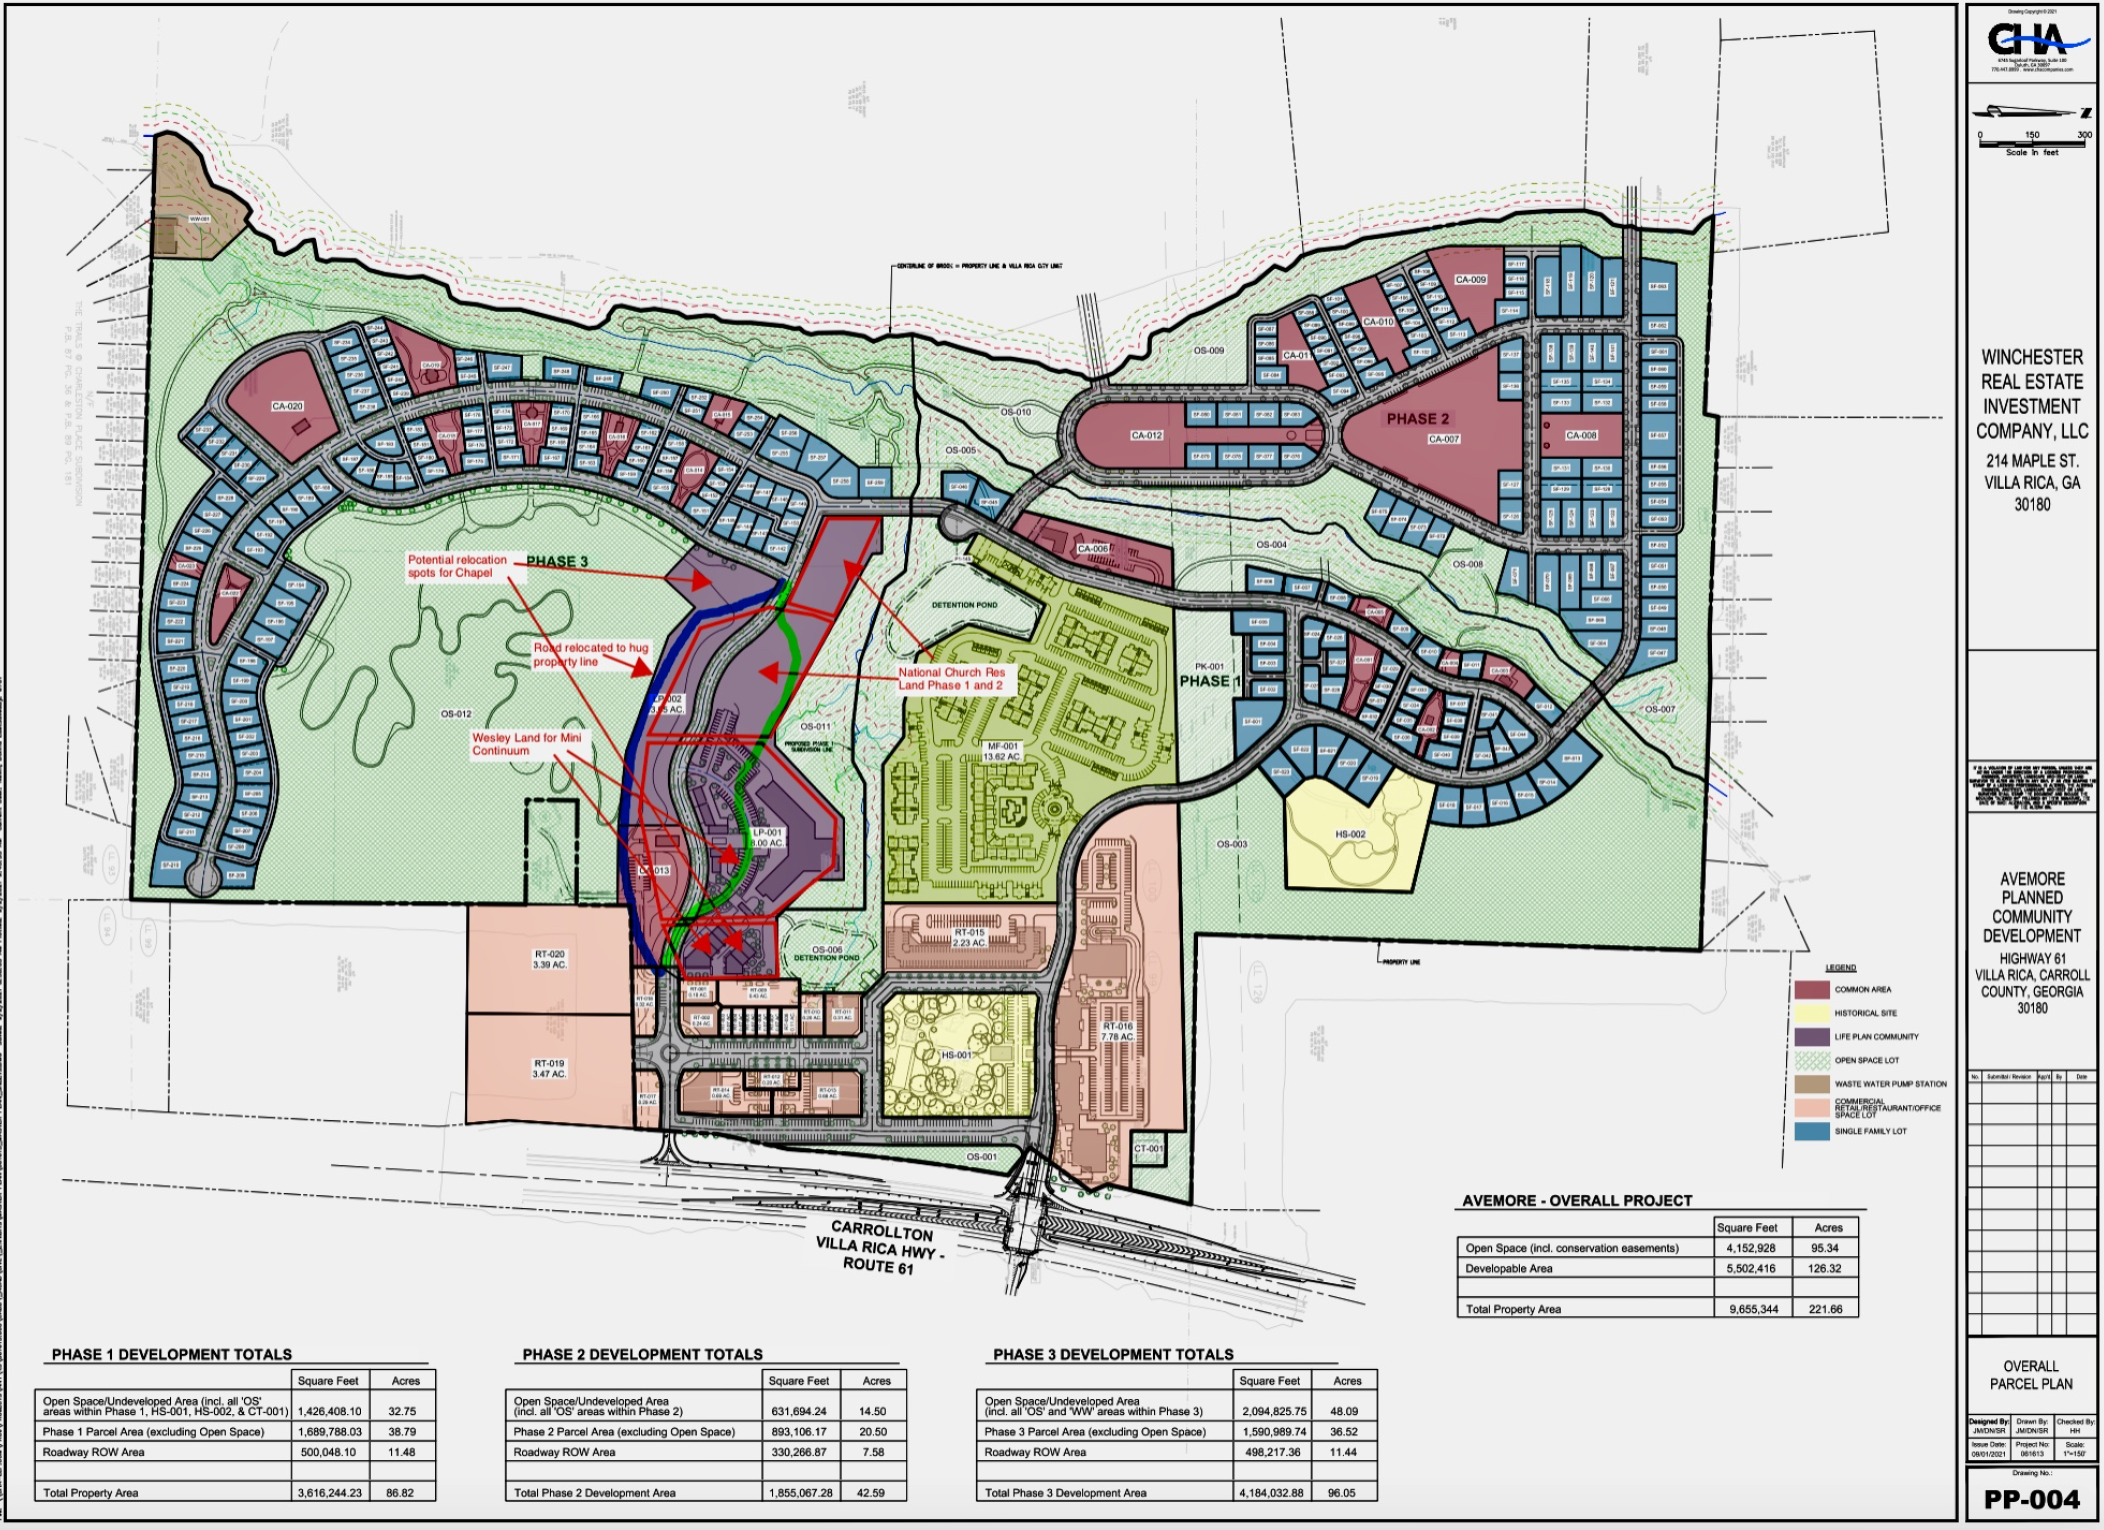 Villa Rica, Georgia Site Plan Development